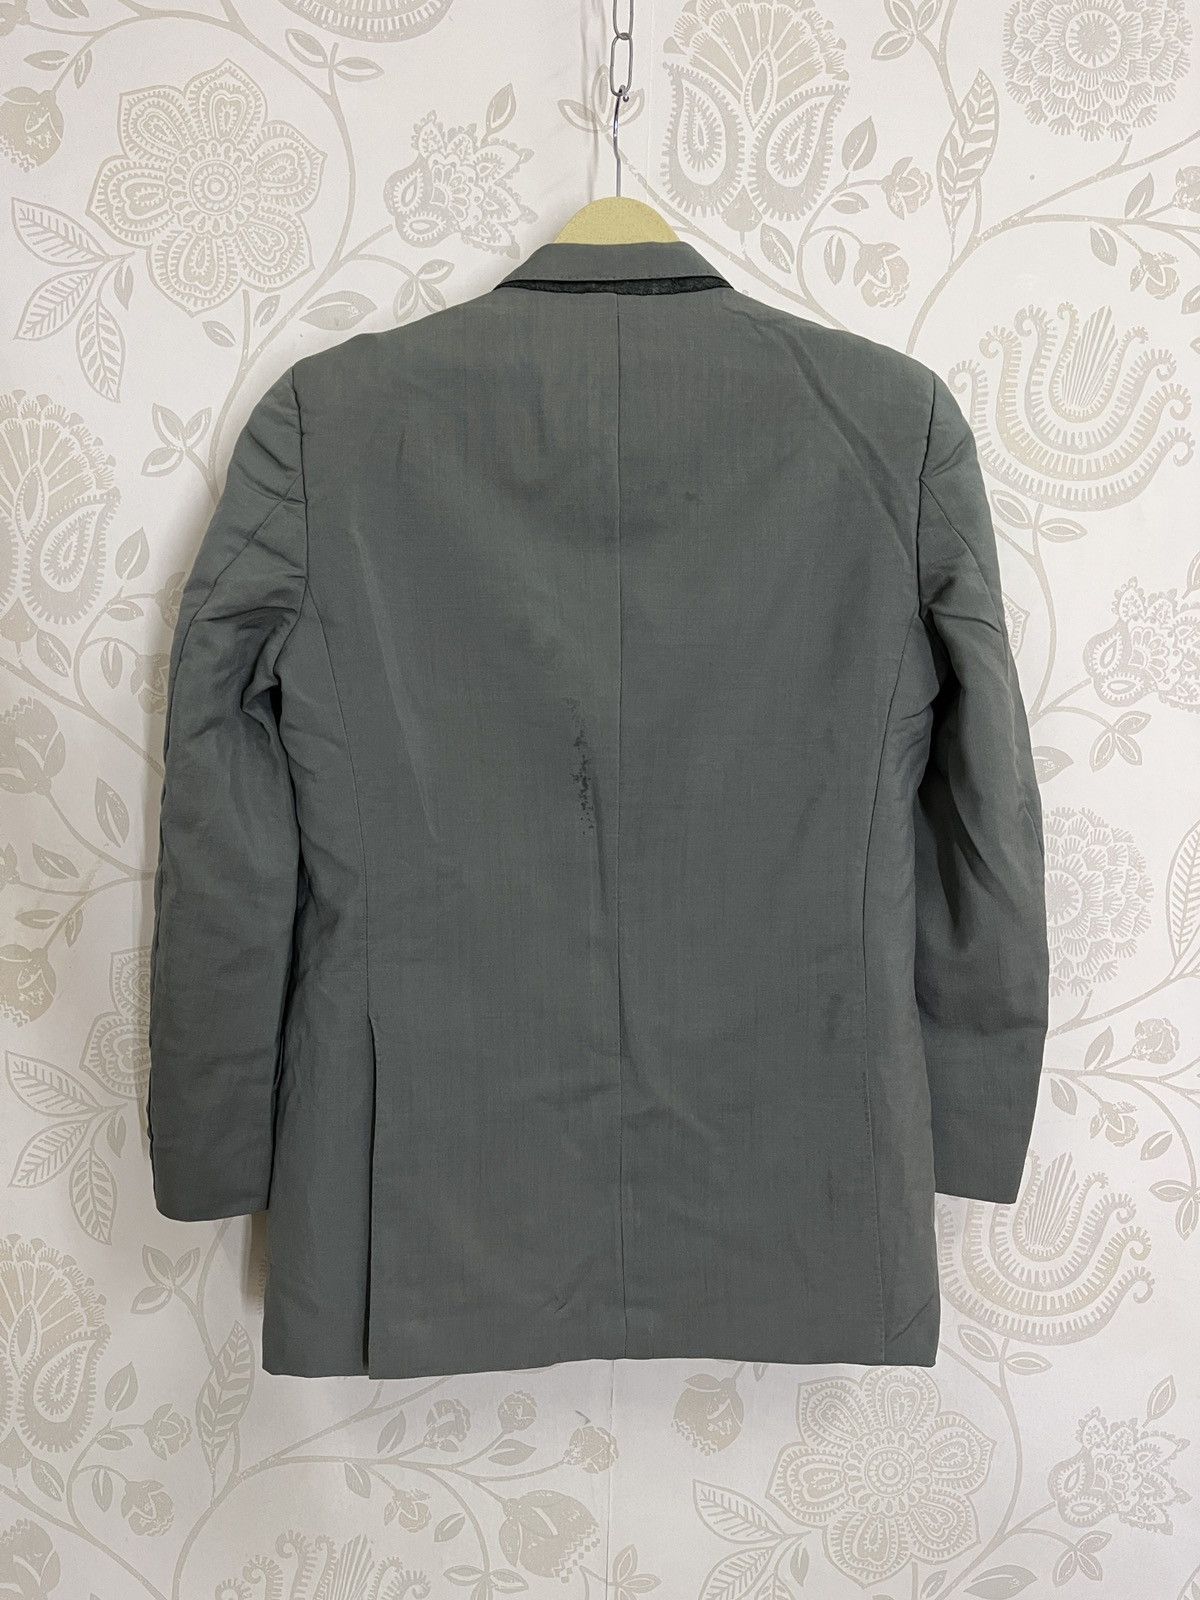 Steals Balenciaga Blazer Coat Suit Size 36 - 21